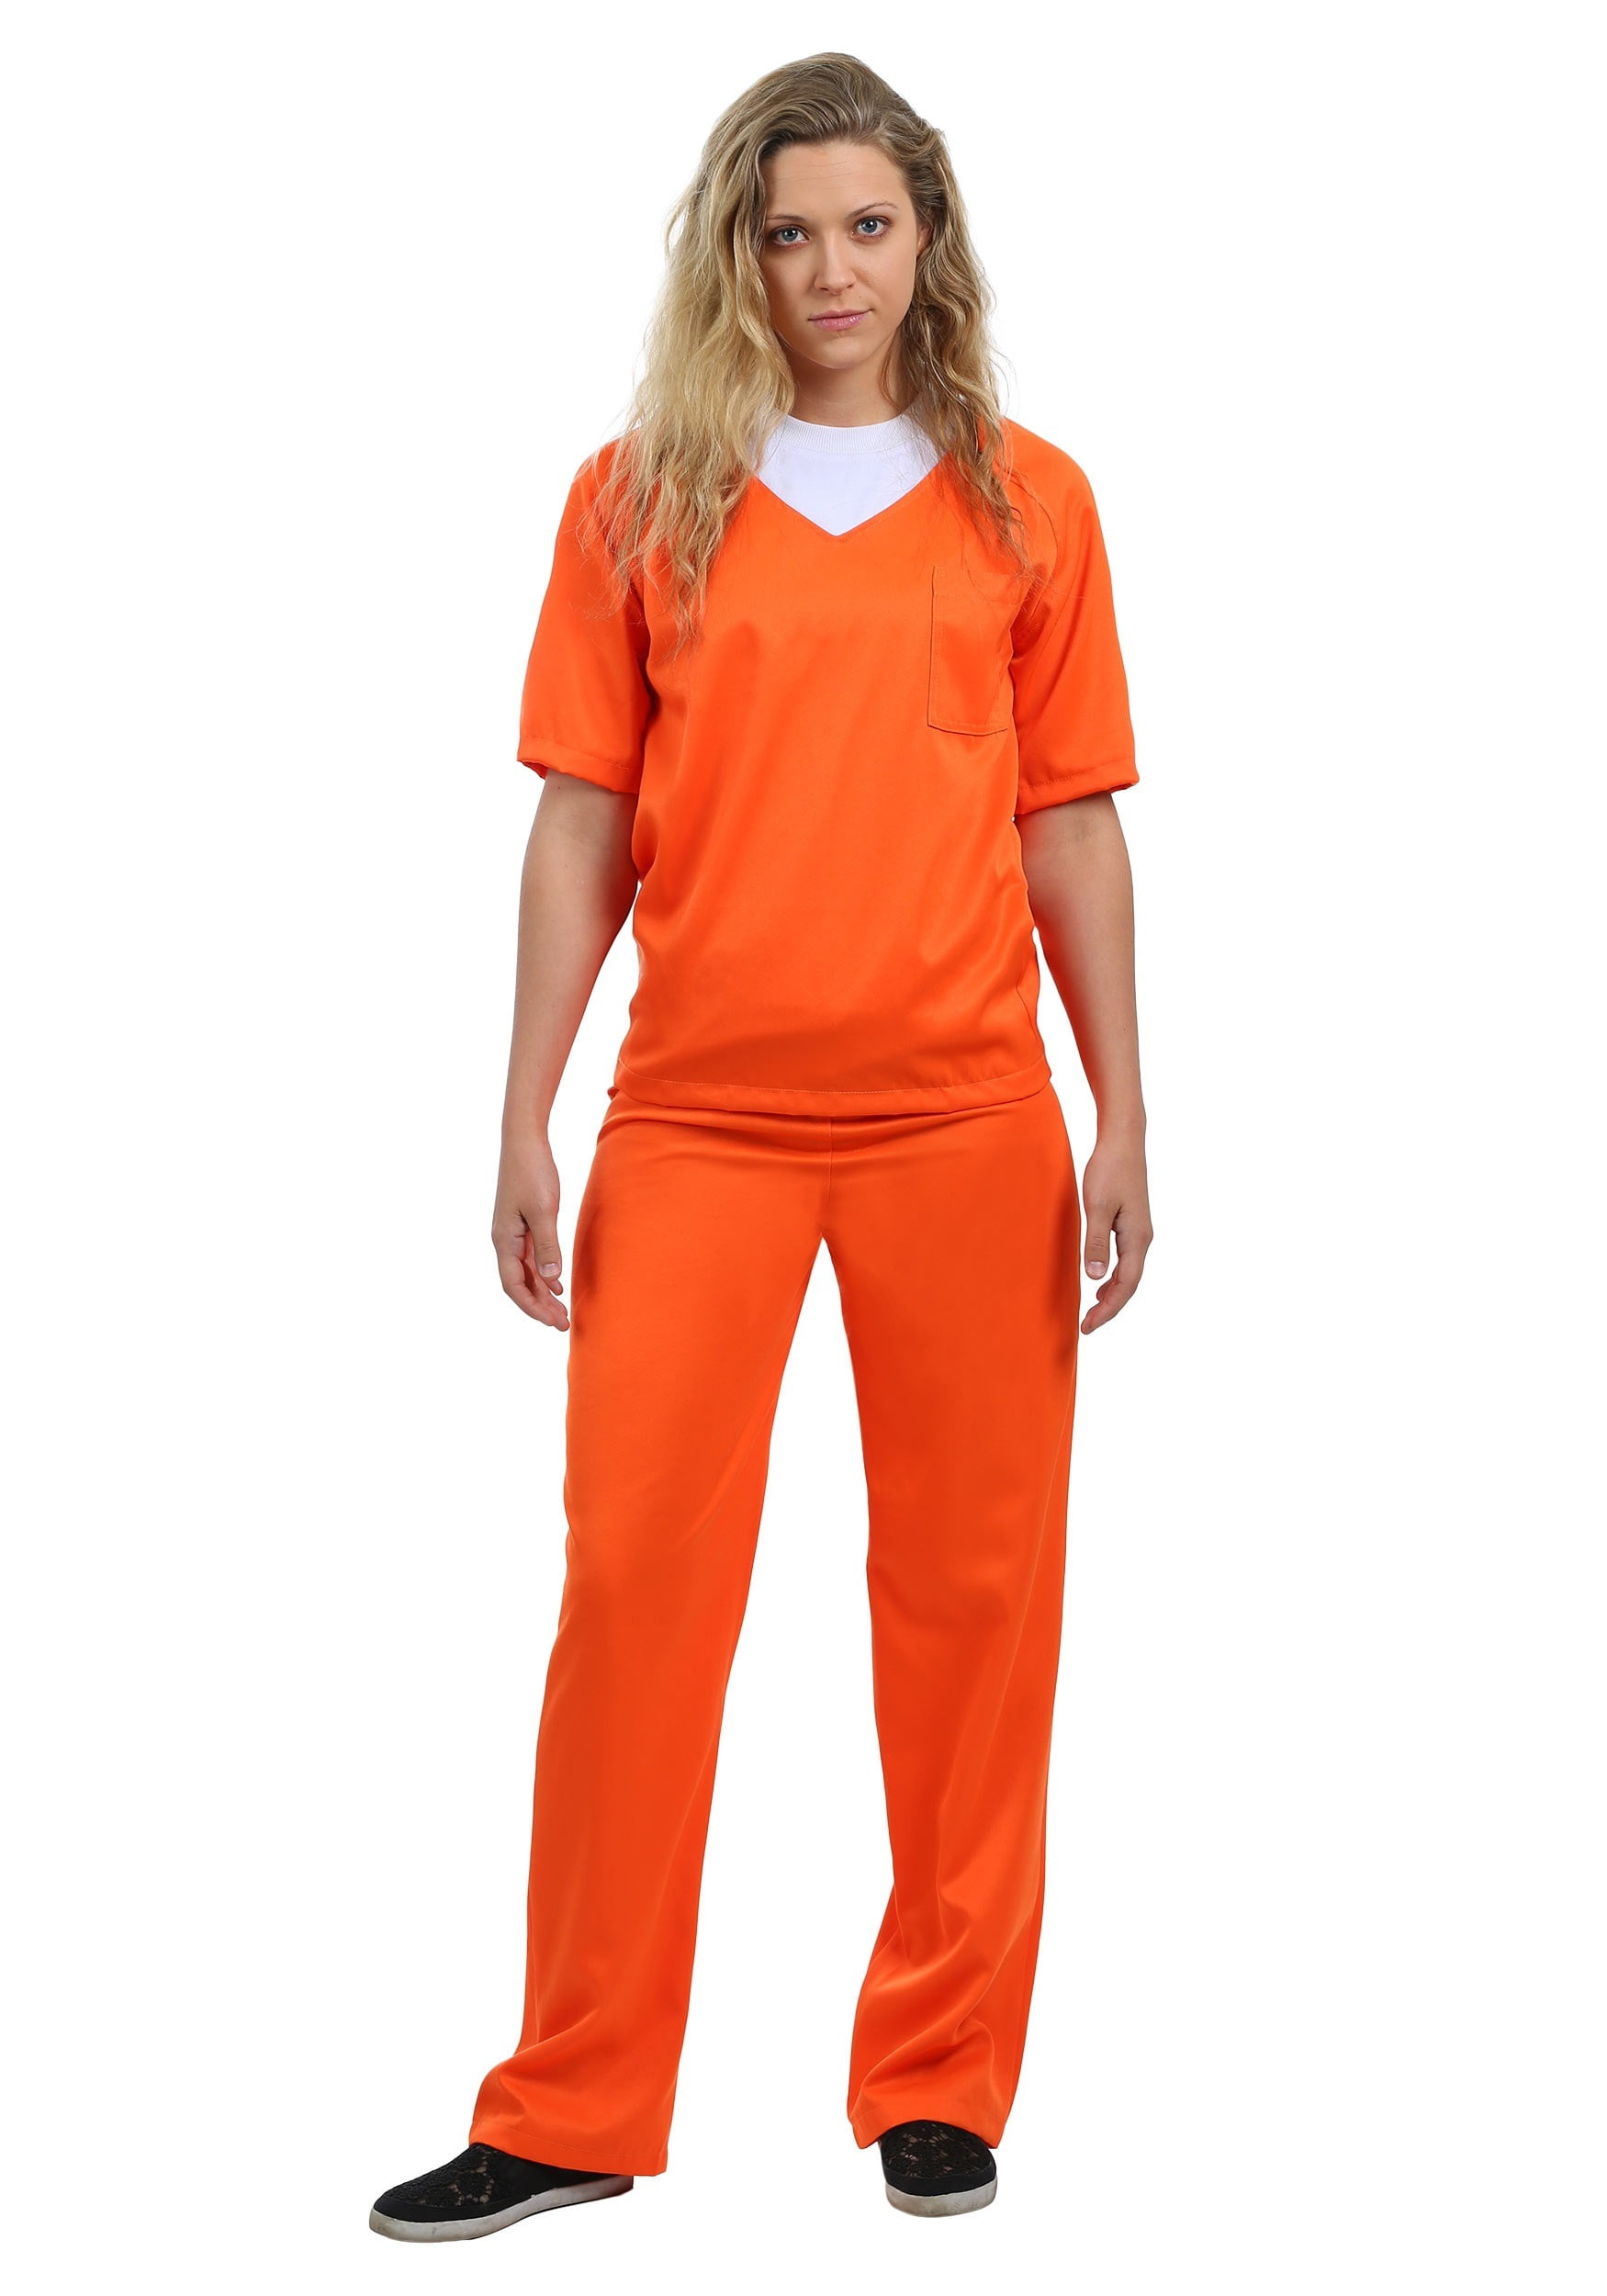 WOMENS PRISONER COSTUME ORANGE TOP TROUSERS CONVICT HALLOWEEN FANCY DRESS 8/20